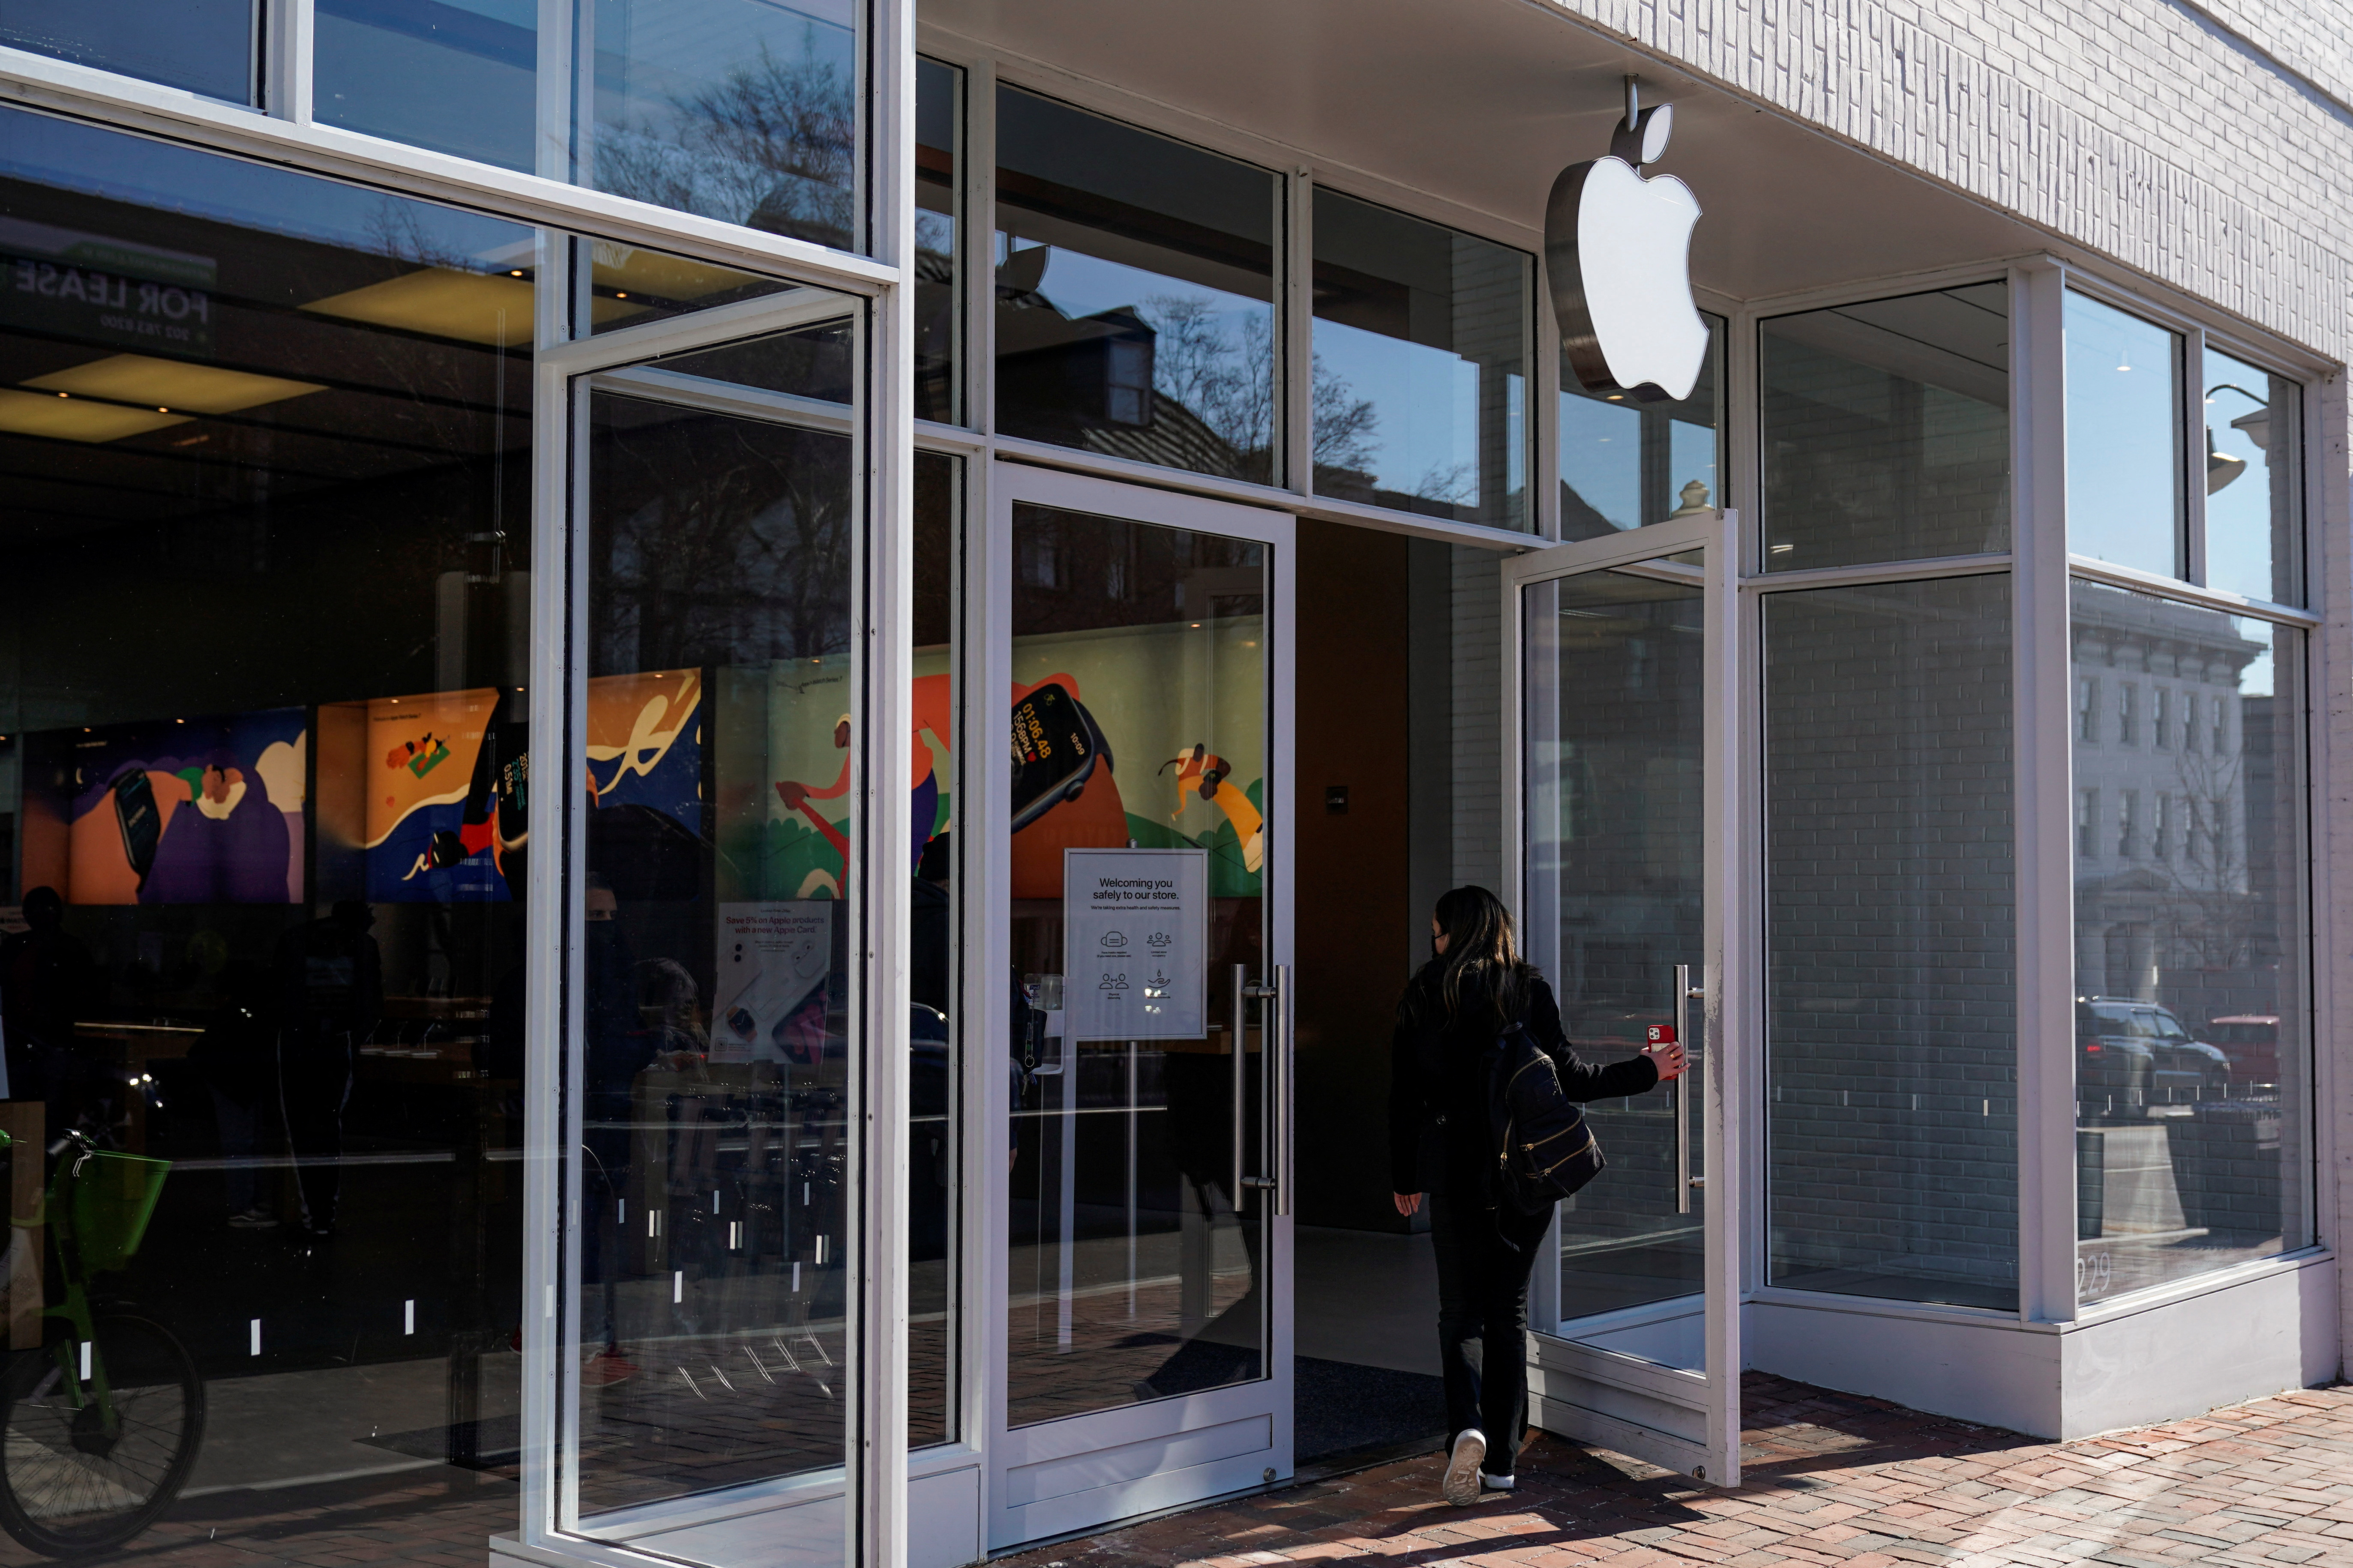 Bethesda Row - Apple Store - Apple